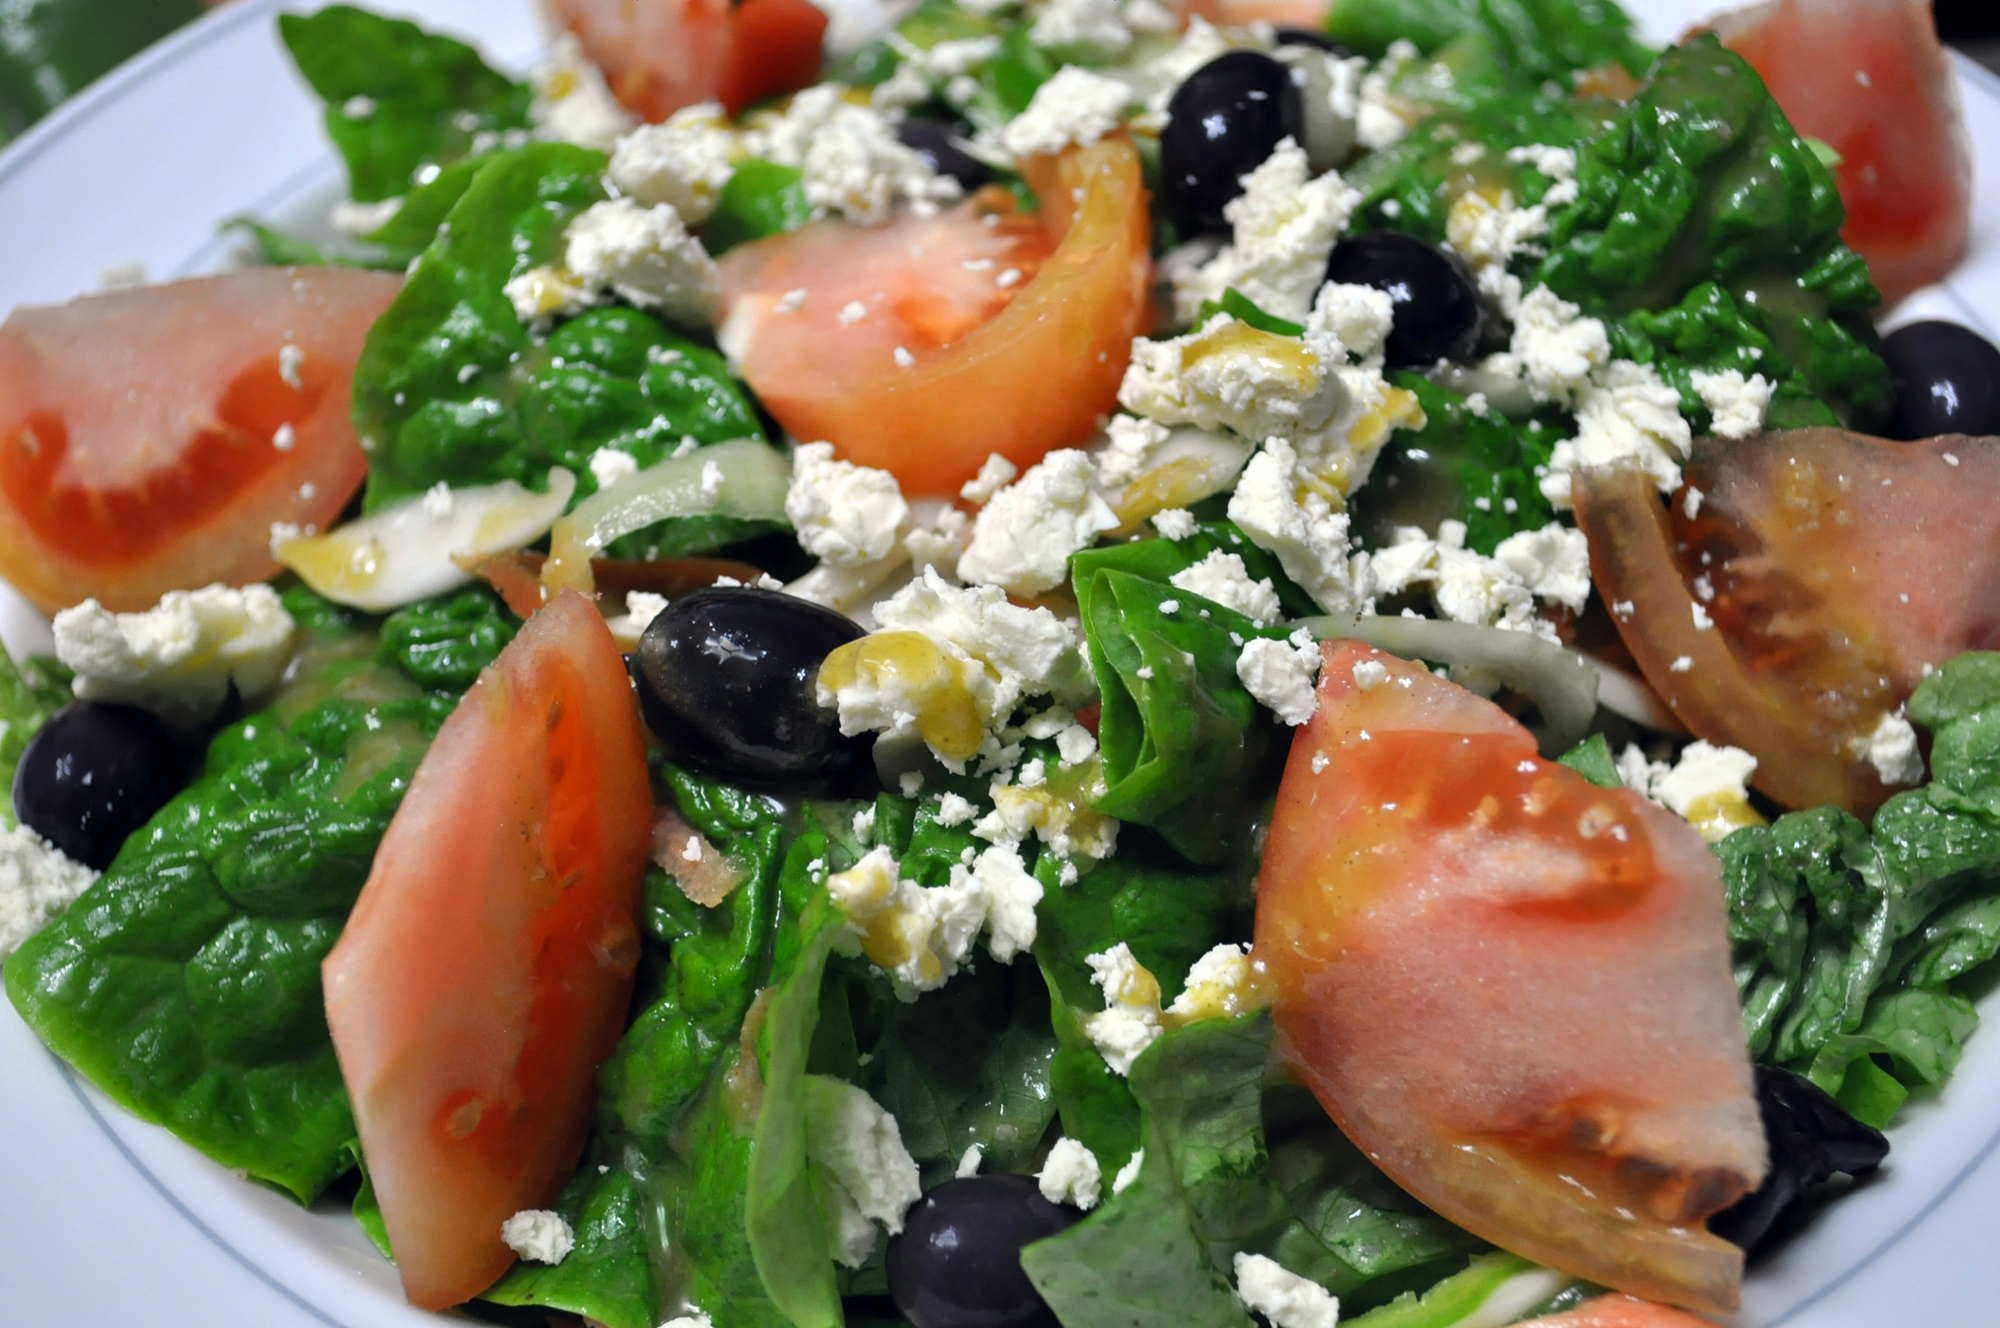 Traditional Greek cuisine